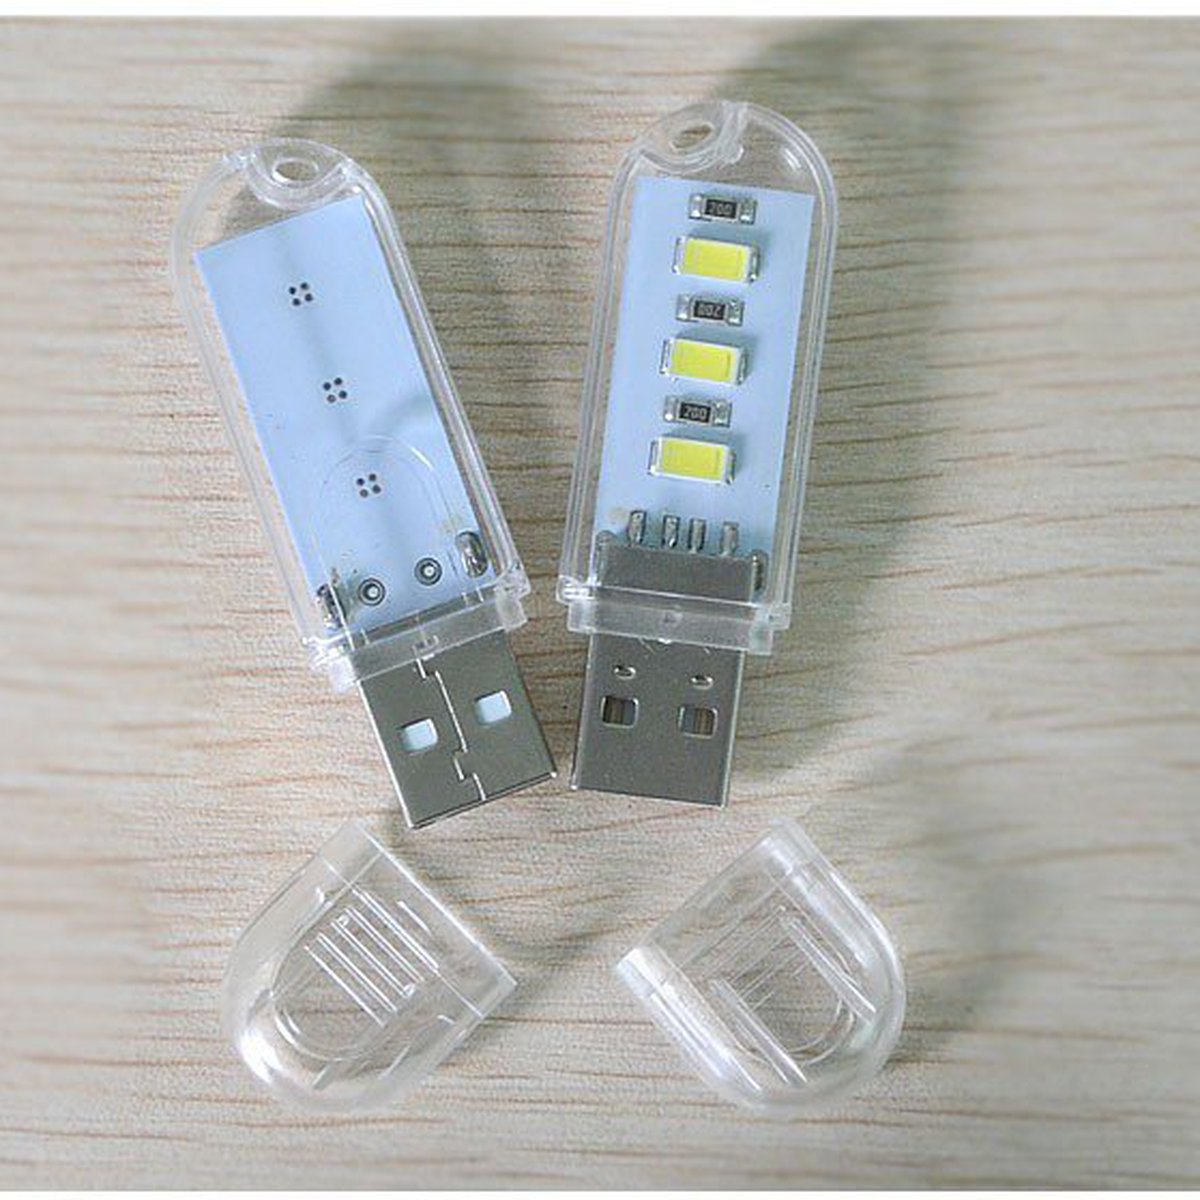 Mini USB Powered Light - 3 x White LEDs (+options) from IR